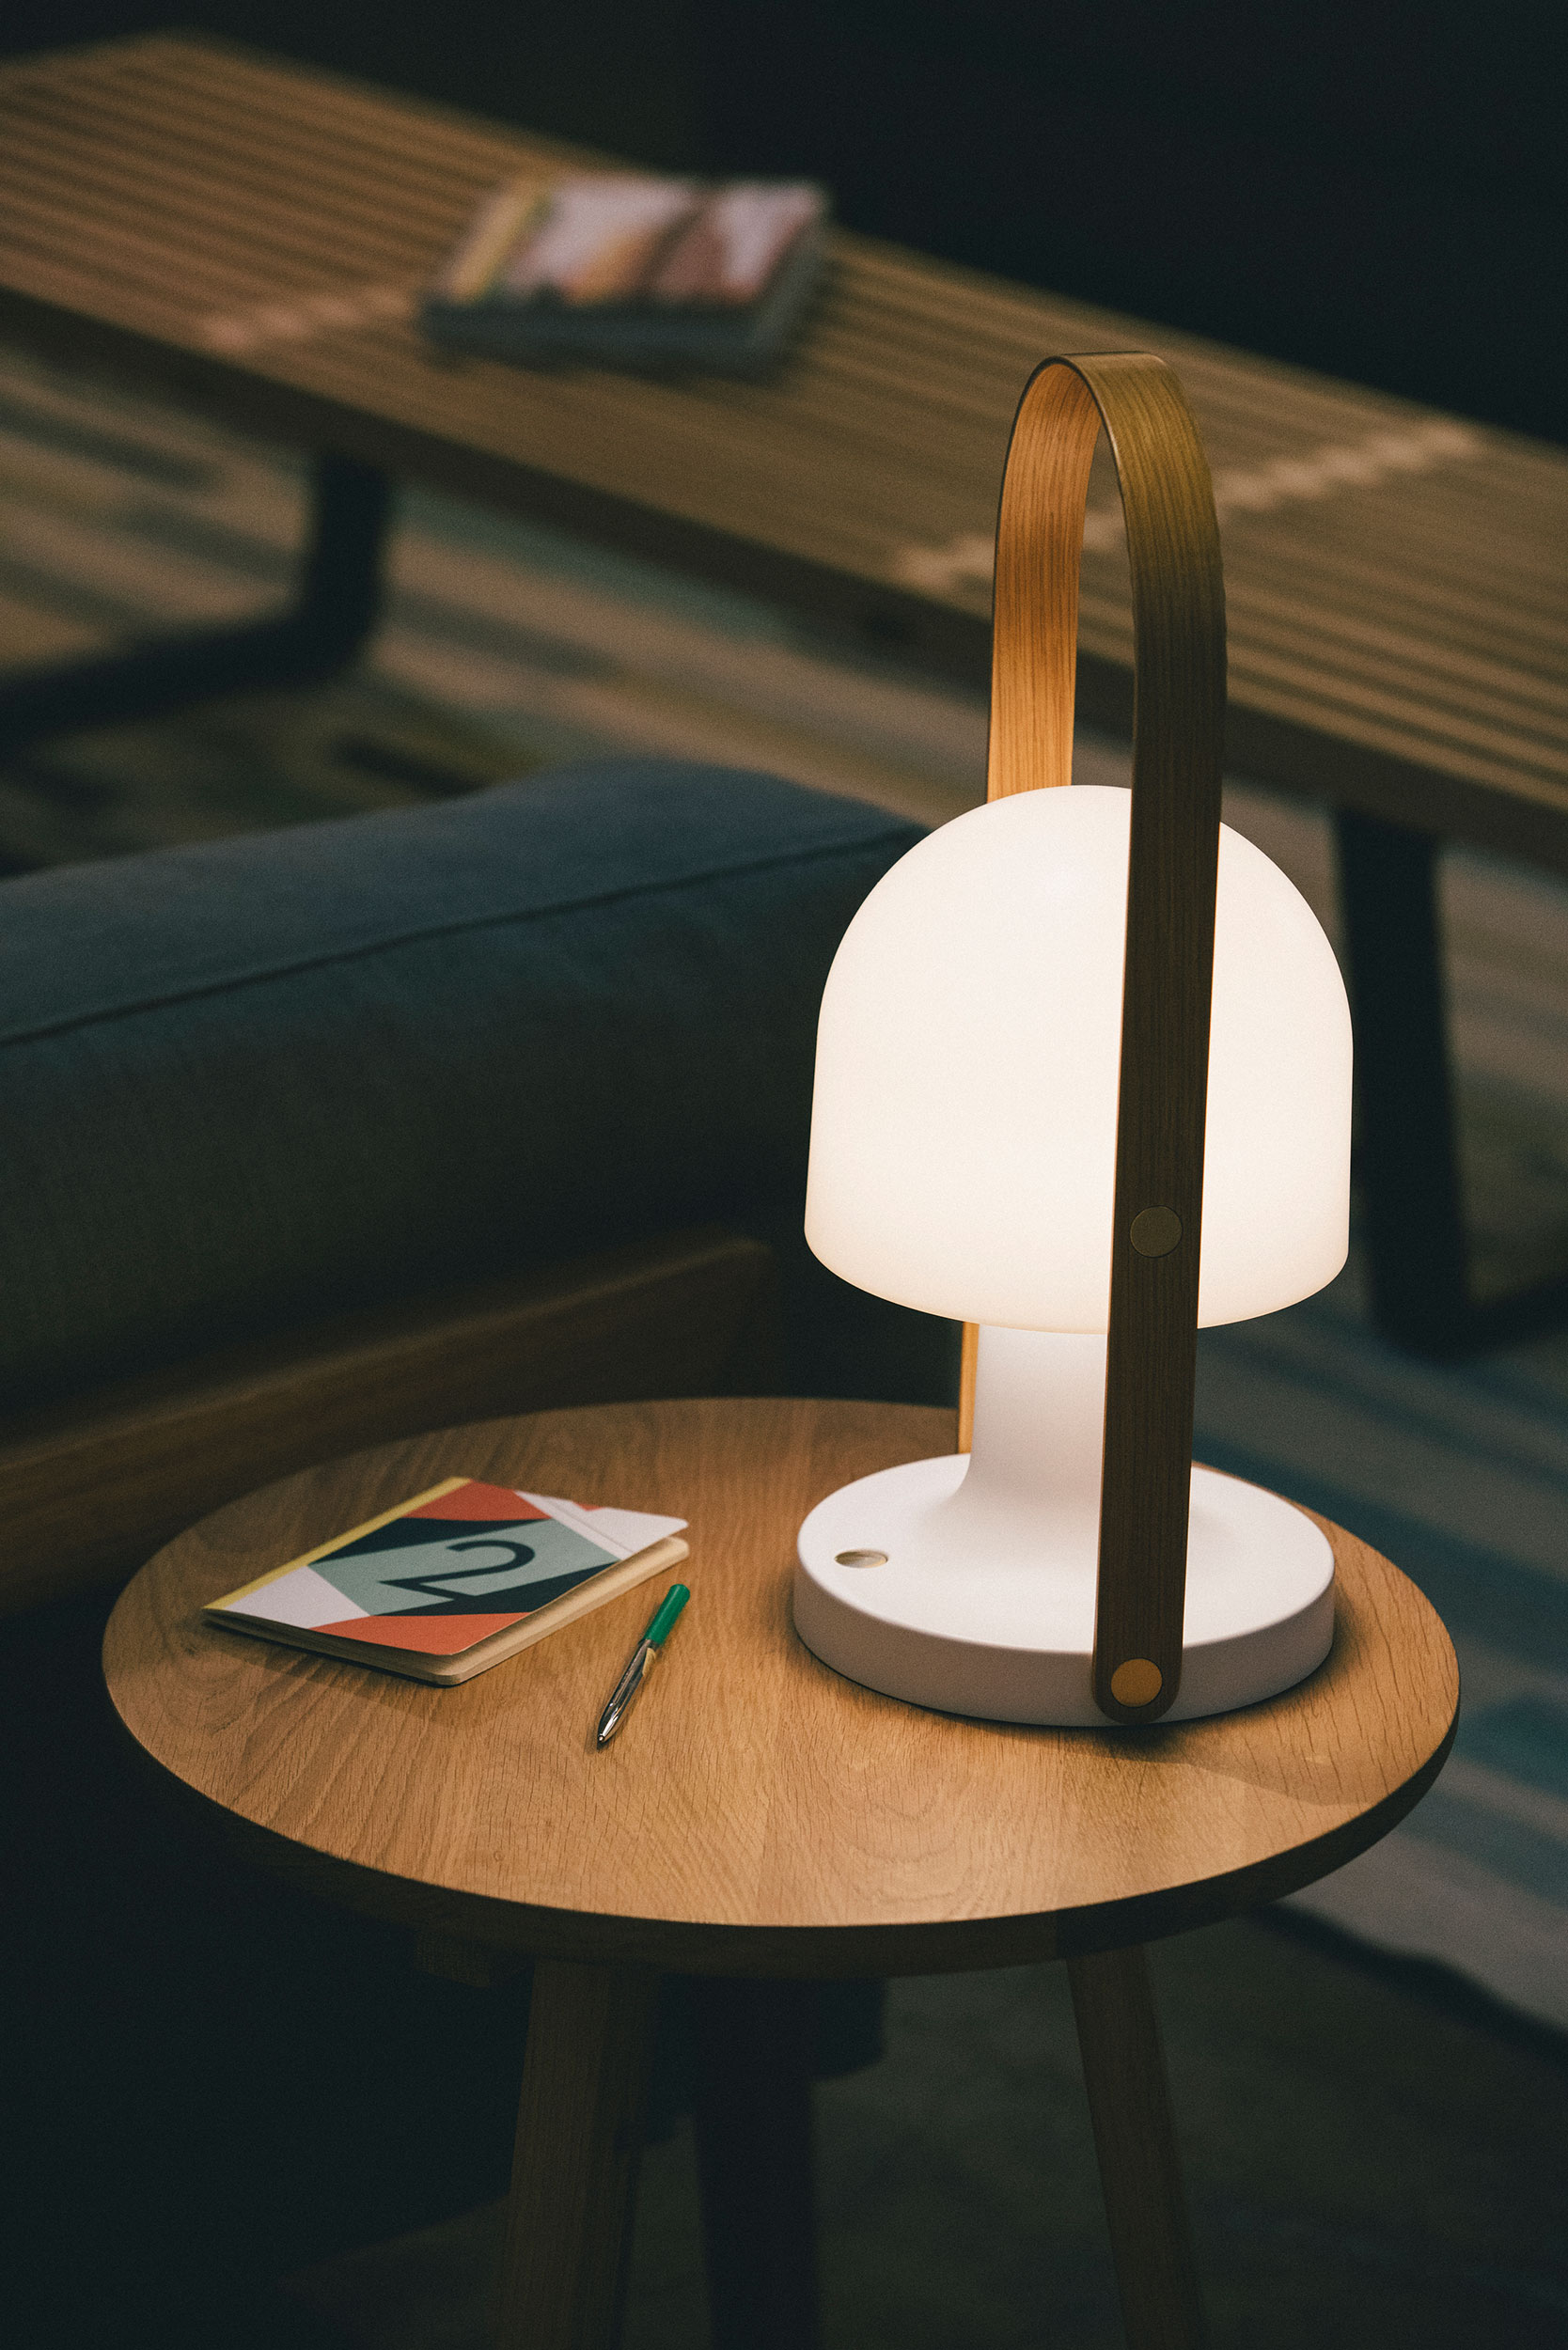 FollowMe Portable Table Lamp by Marset at